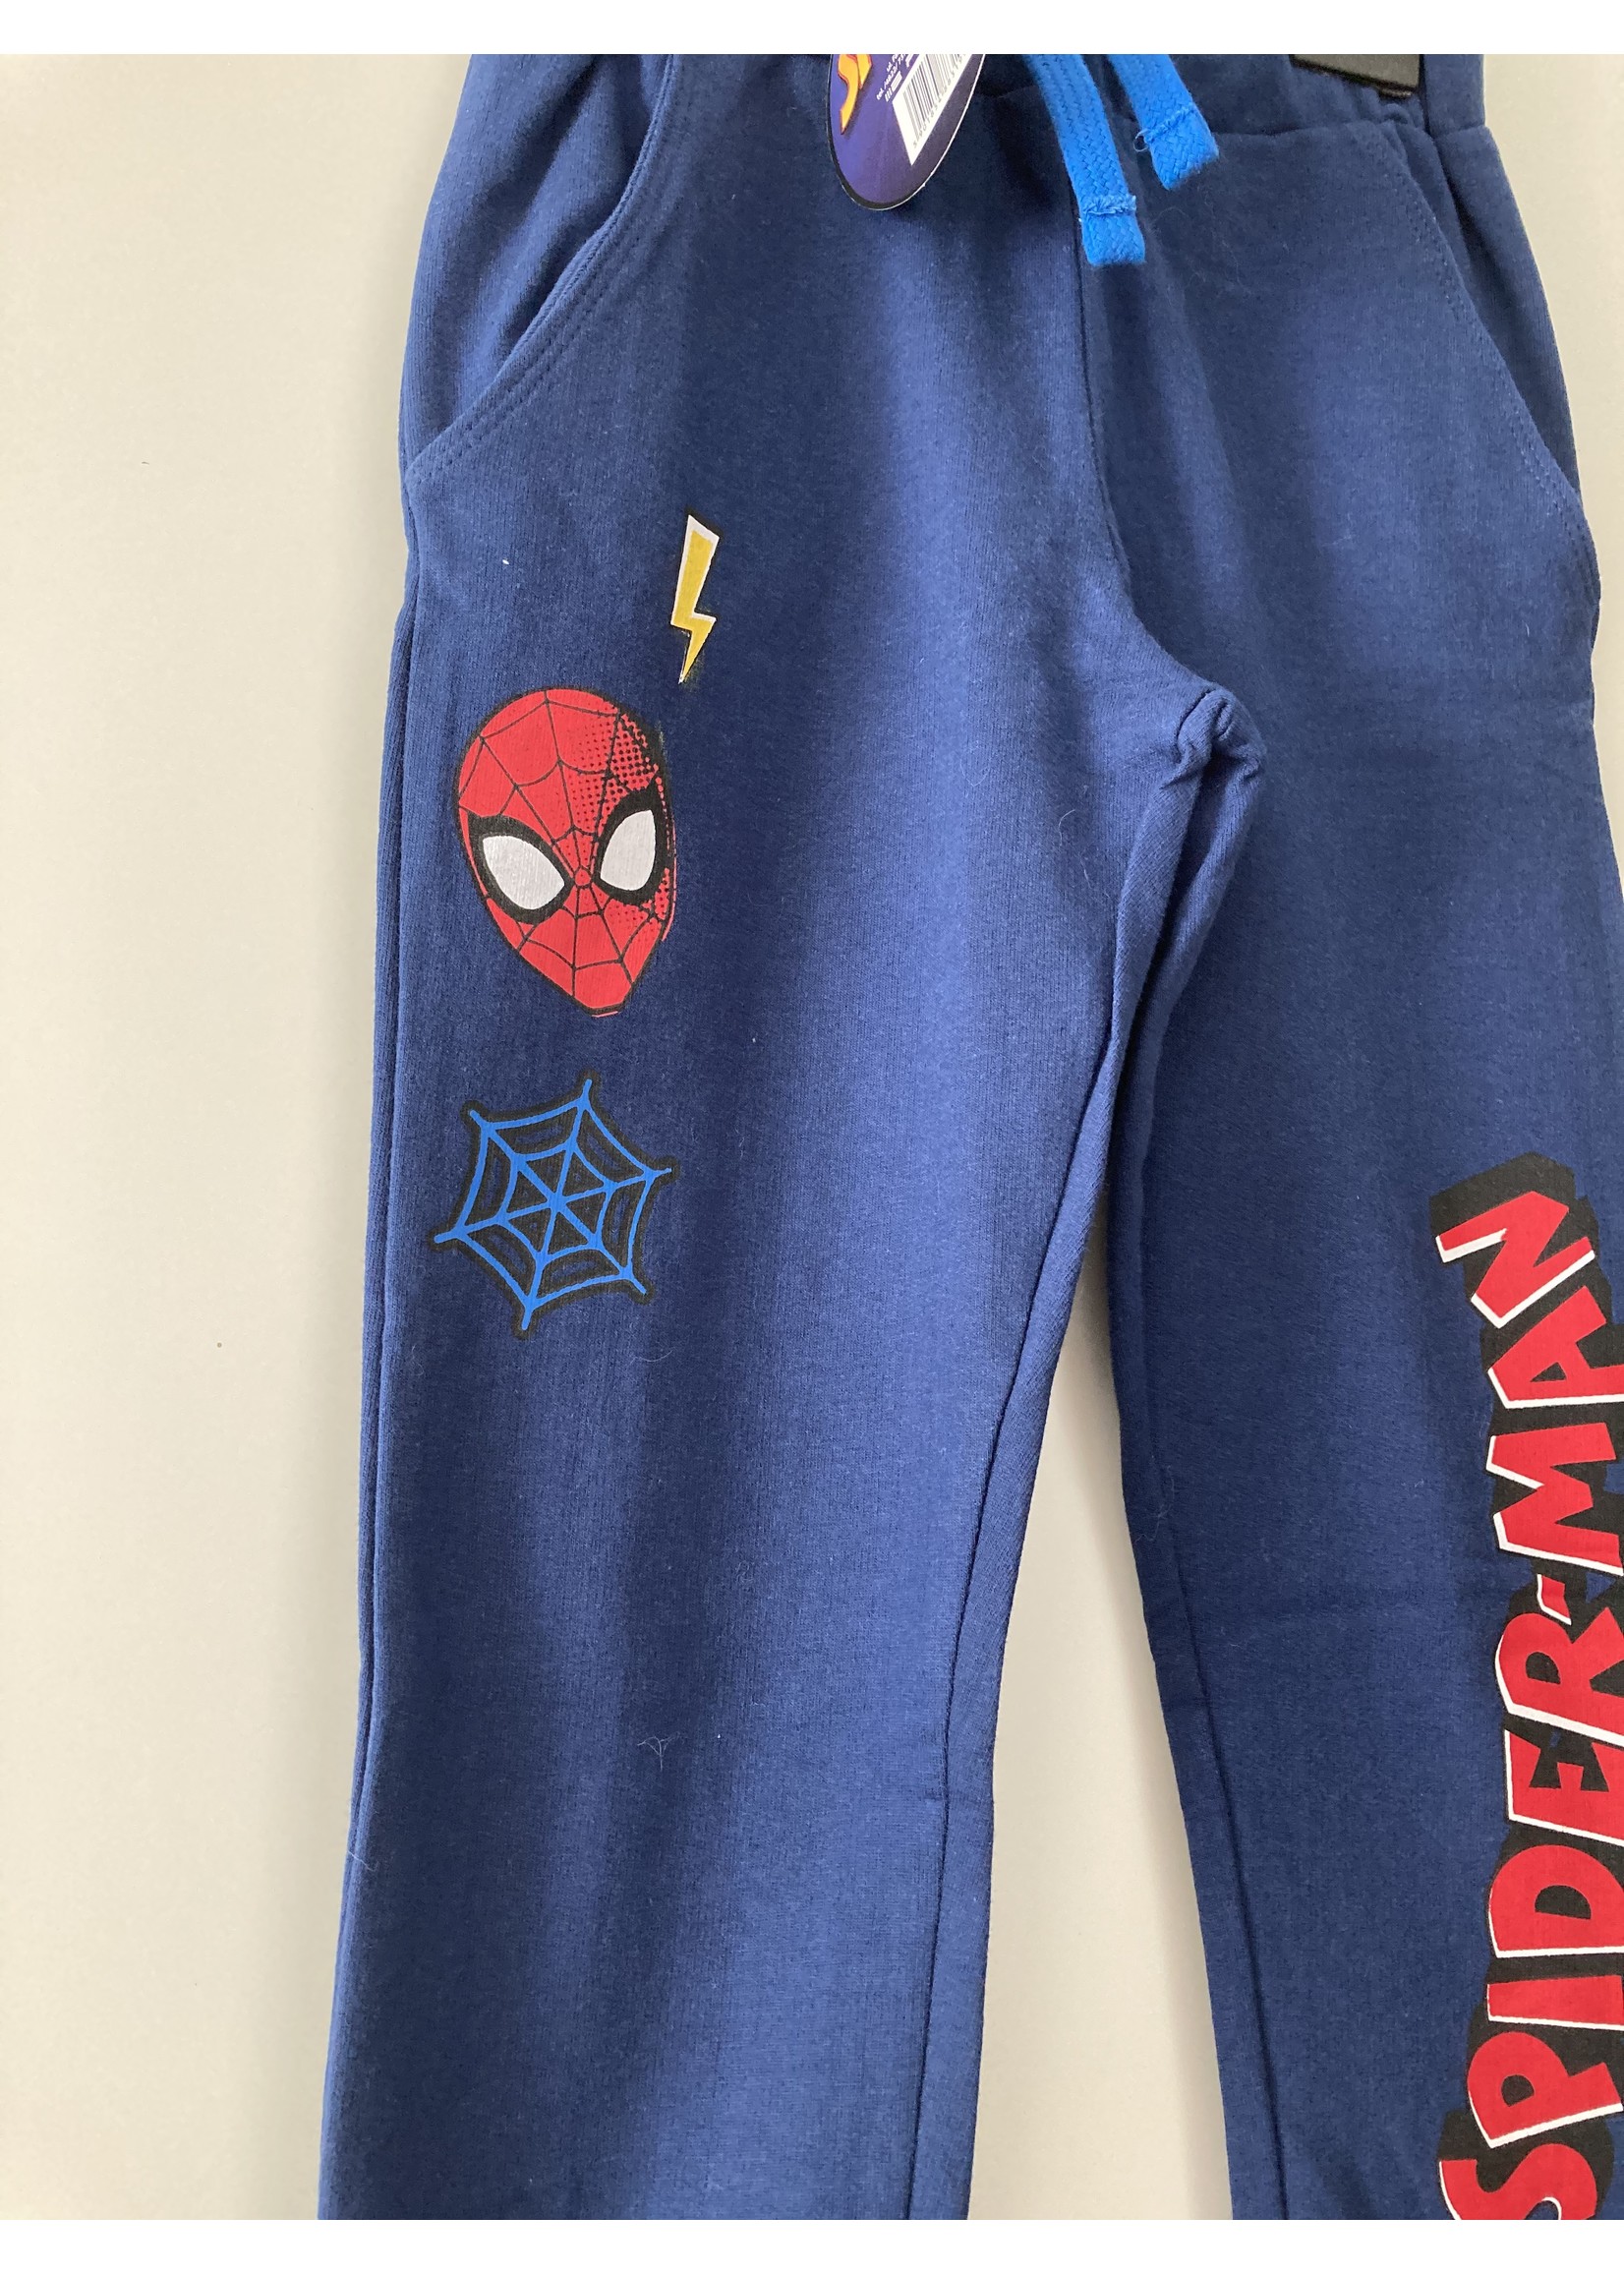 Marvel Spiderman joggingbroek van Marvel Marineblauw